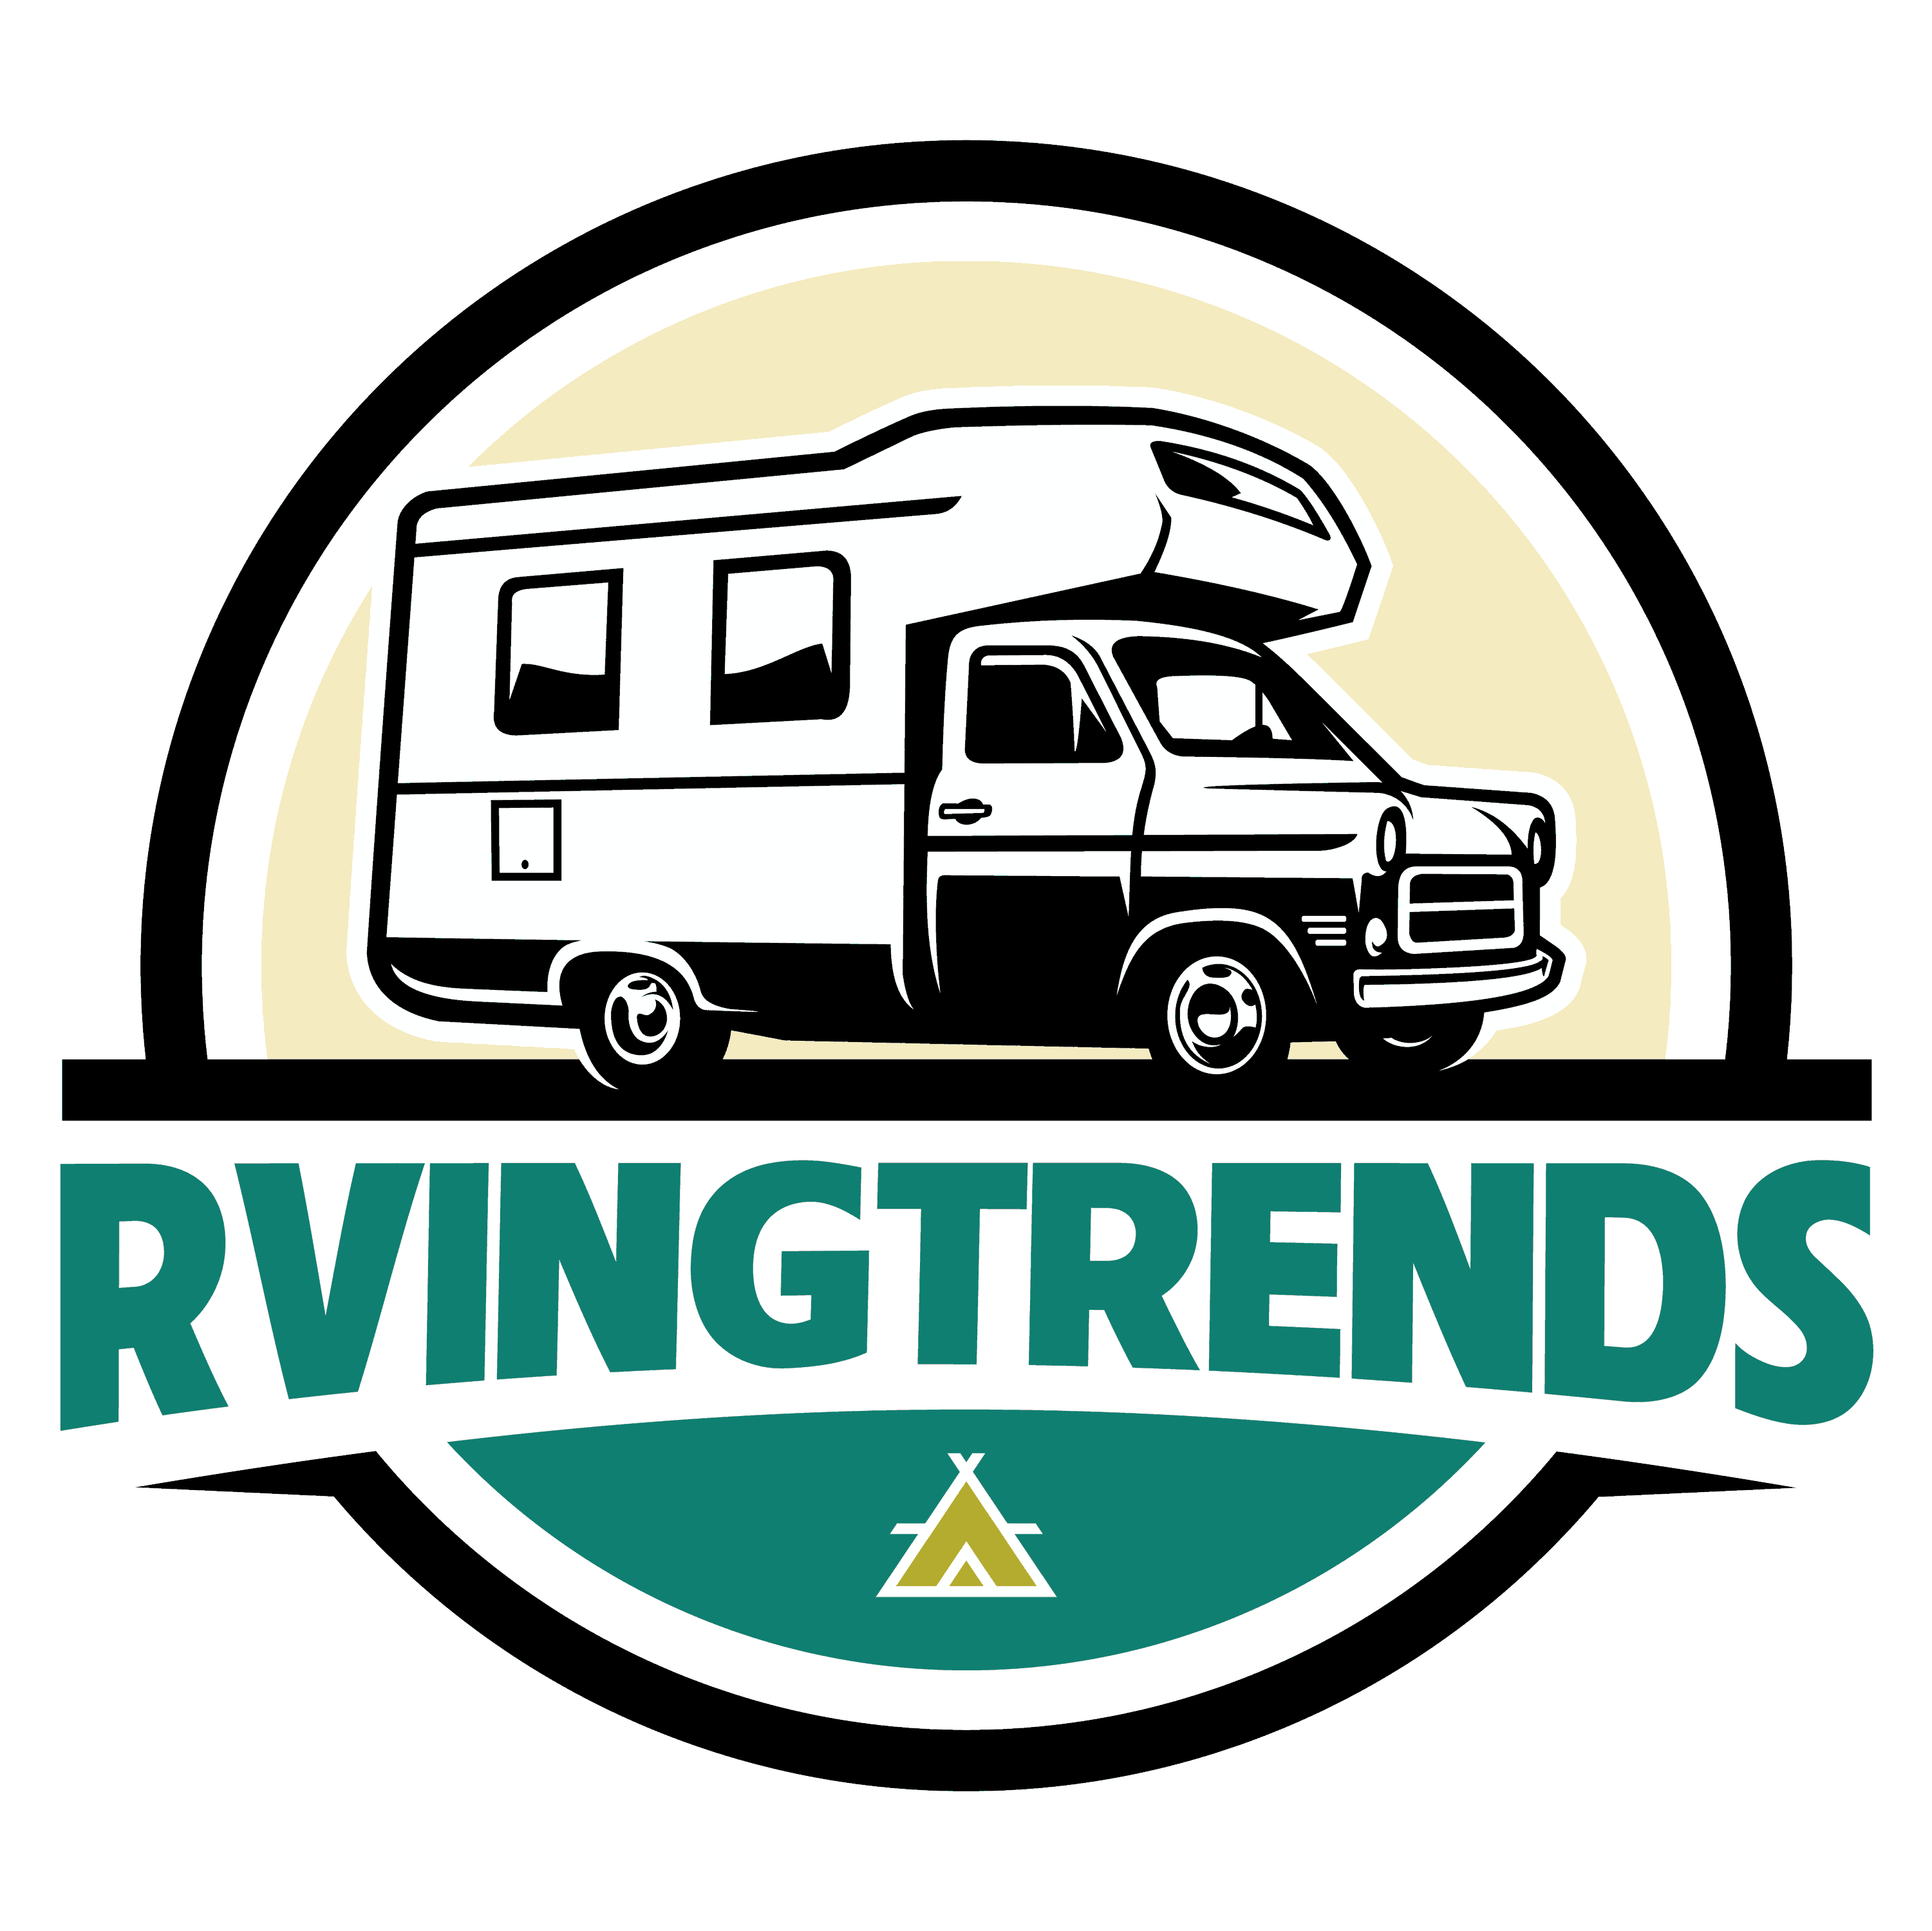 RVing Trends logo